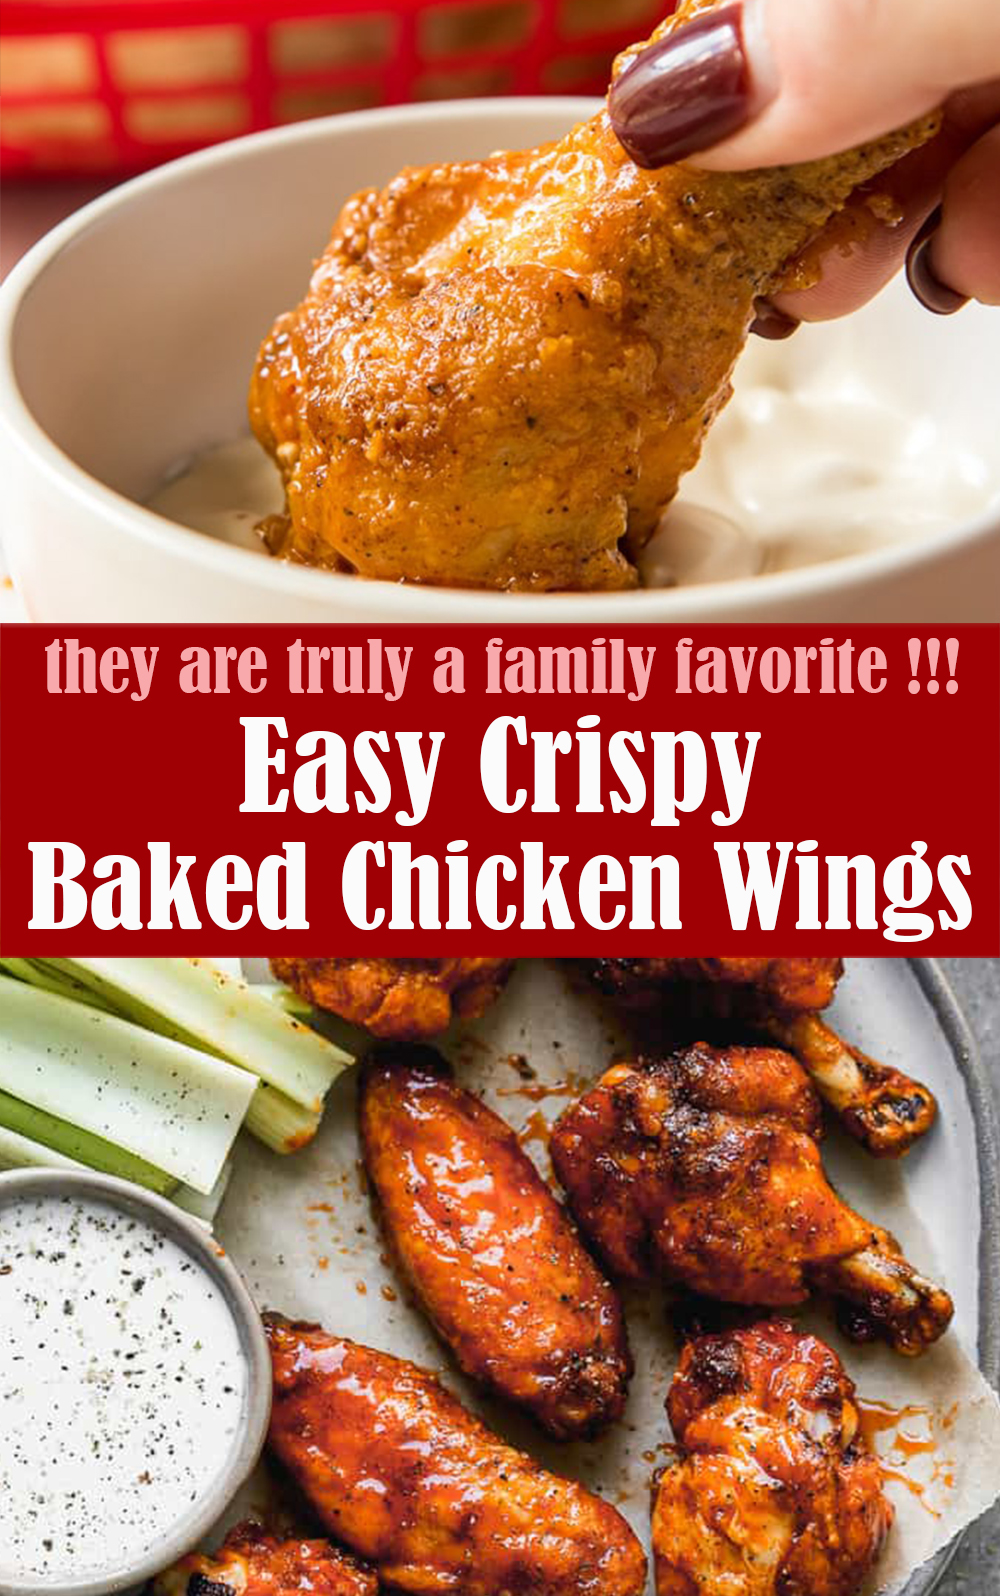 Easy Crispy Baked Chicken Wings